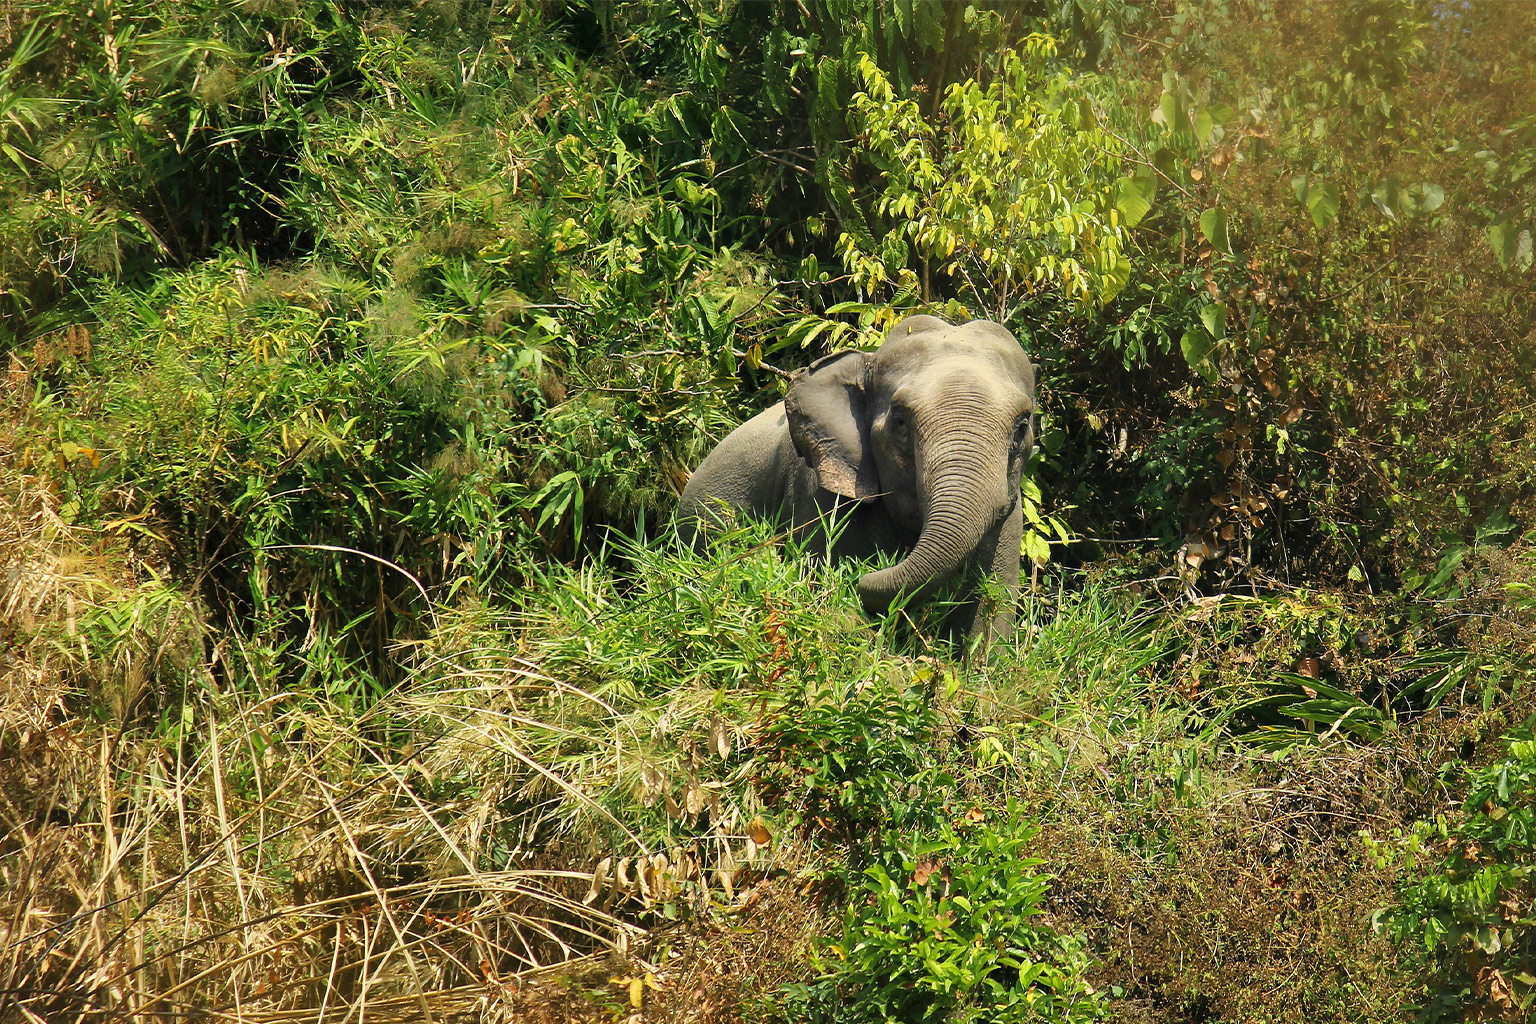 Wild elephant in Bangladesh.